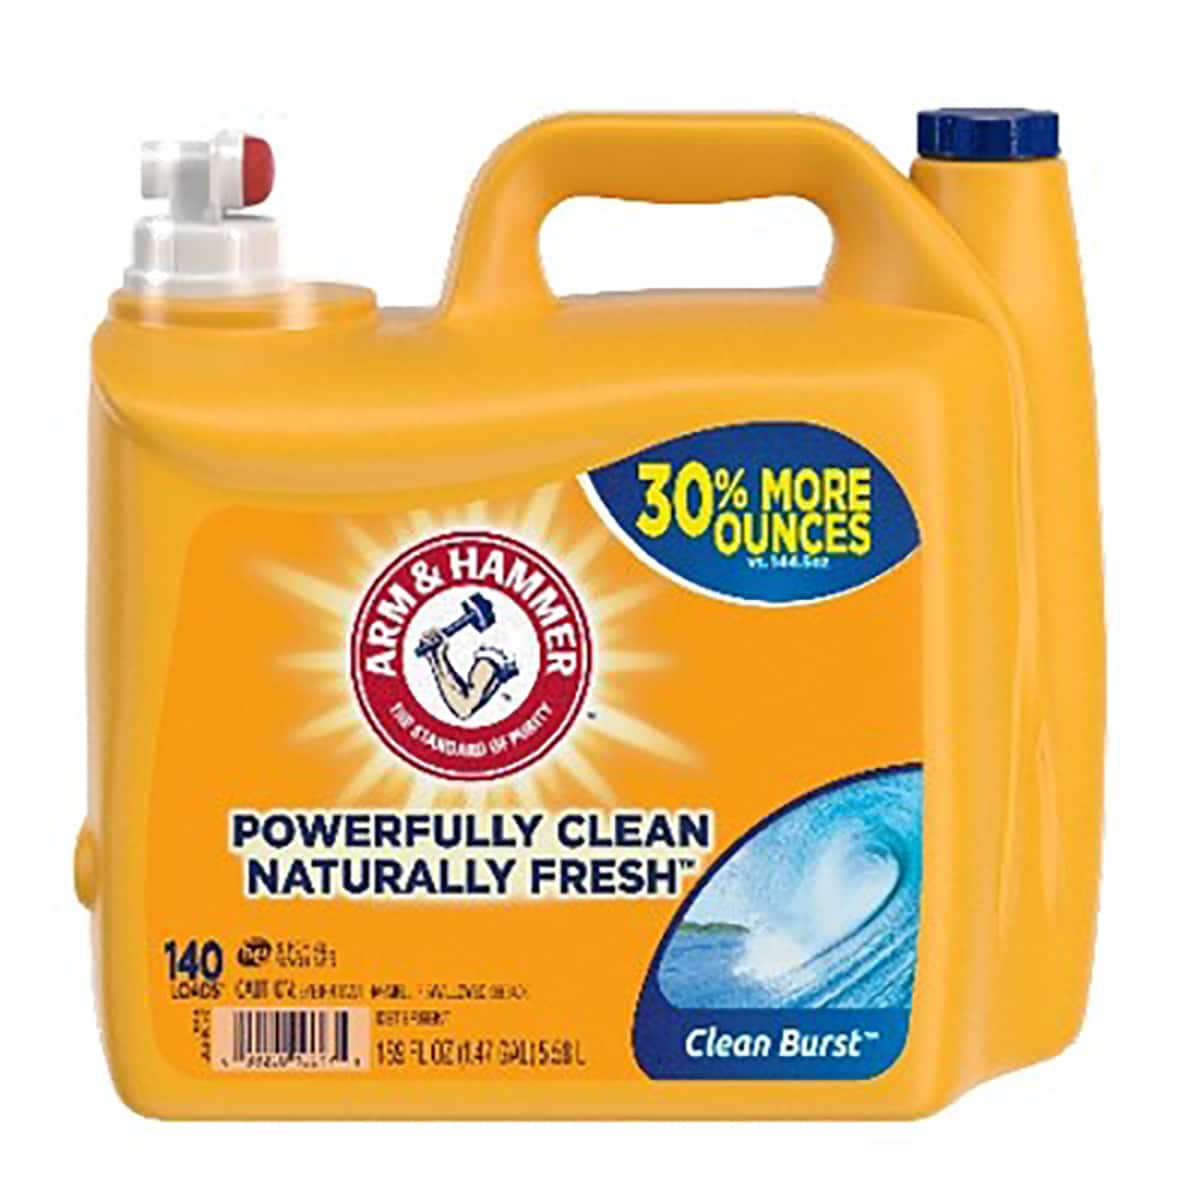 Xtra 249.5 oz. Liquid Laundry Detergent Plus Oxi 42909 - The Home